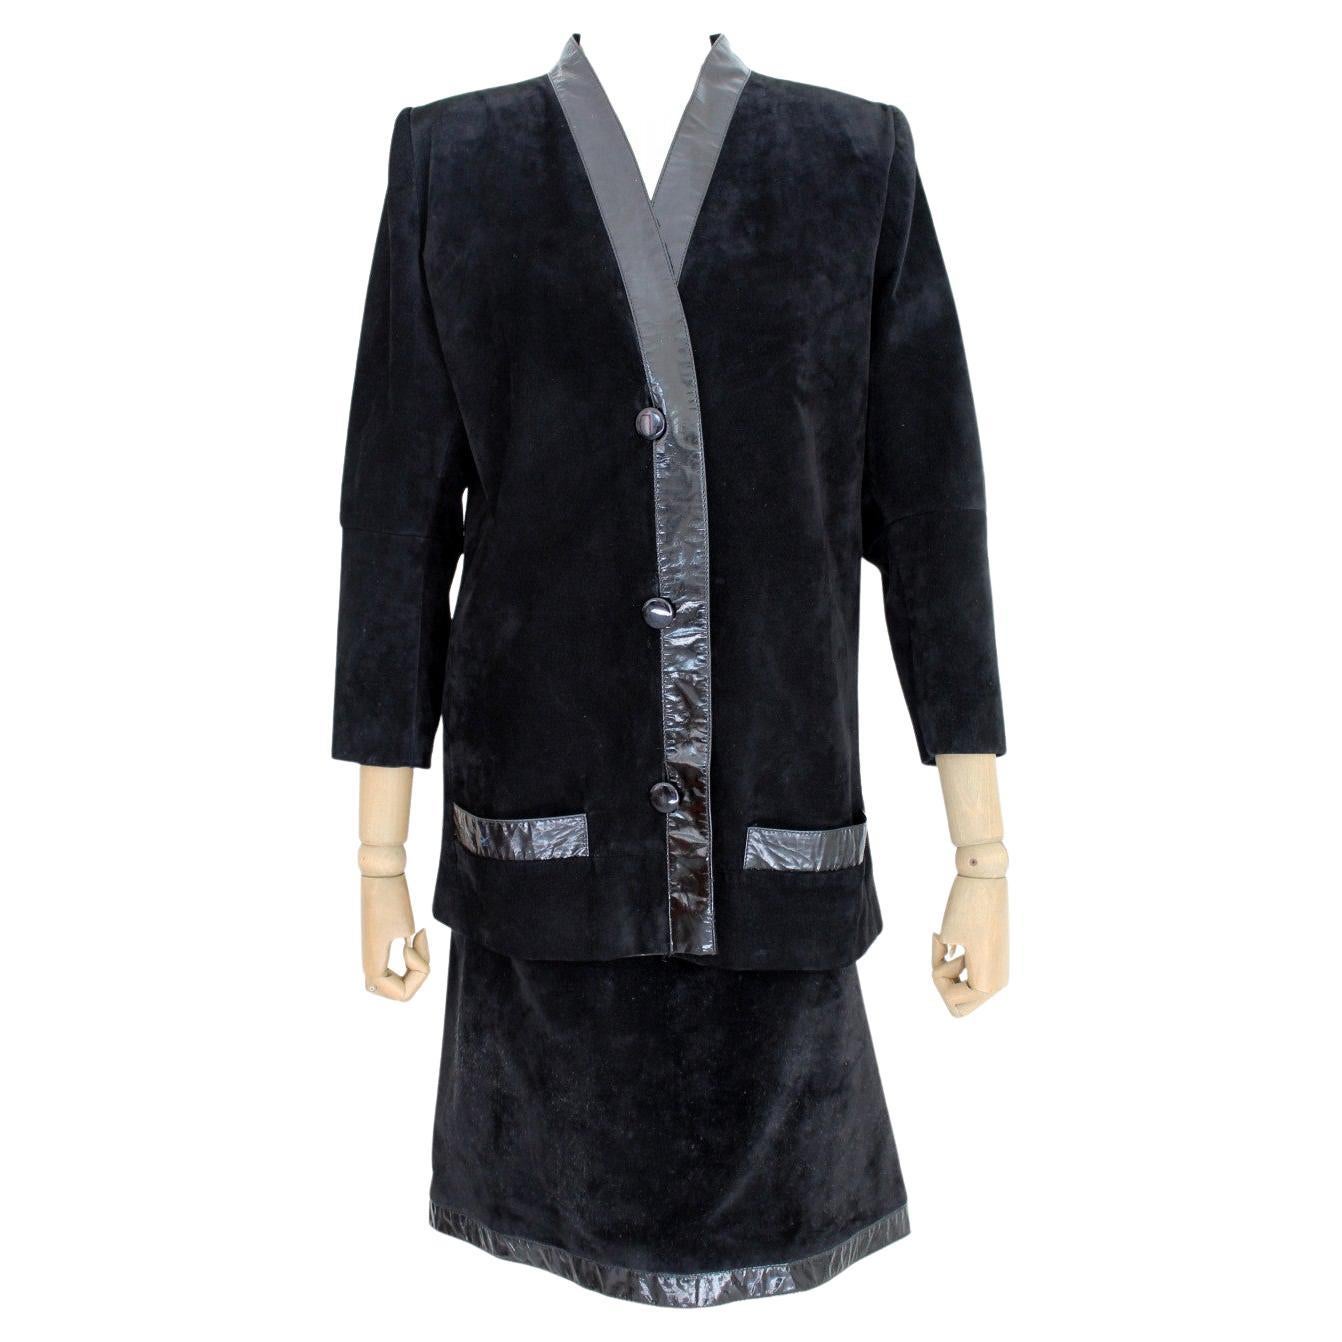 Christian Dior Boutique Black Leather Skirt Suit 1980s